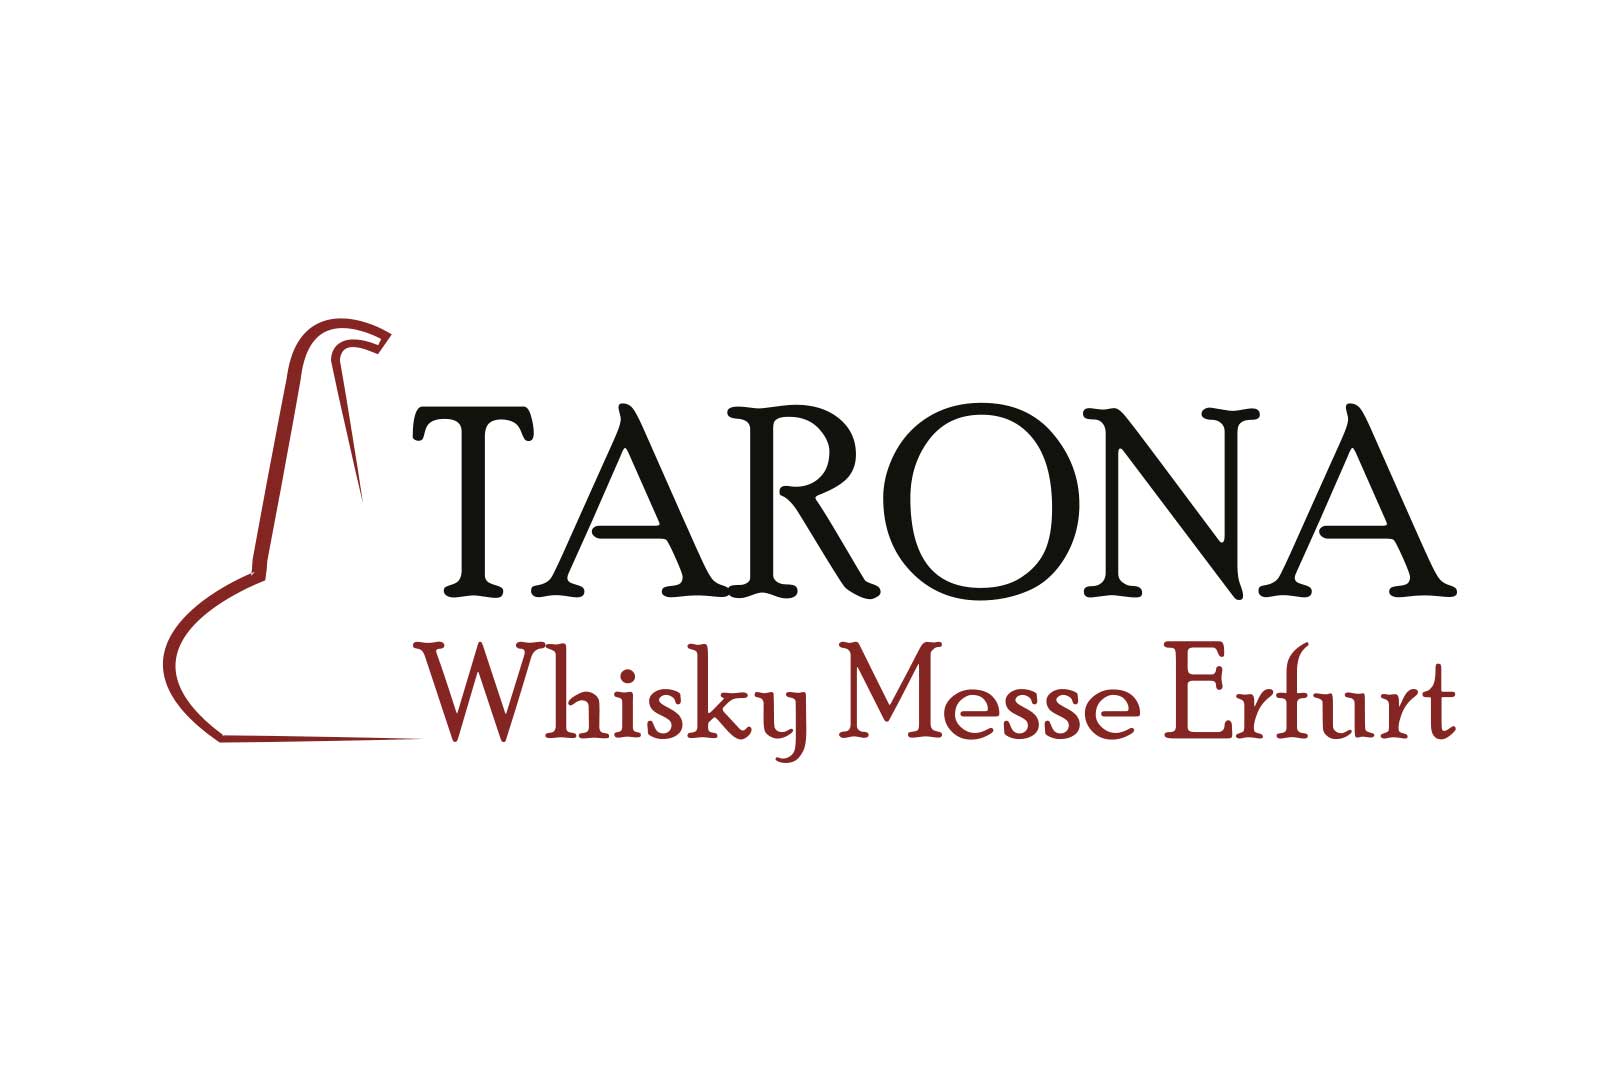 Whisky Event Tarona – Whisky Messe Erfurt in Erfurt